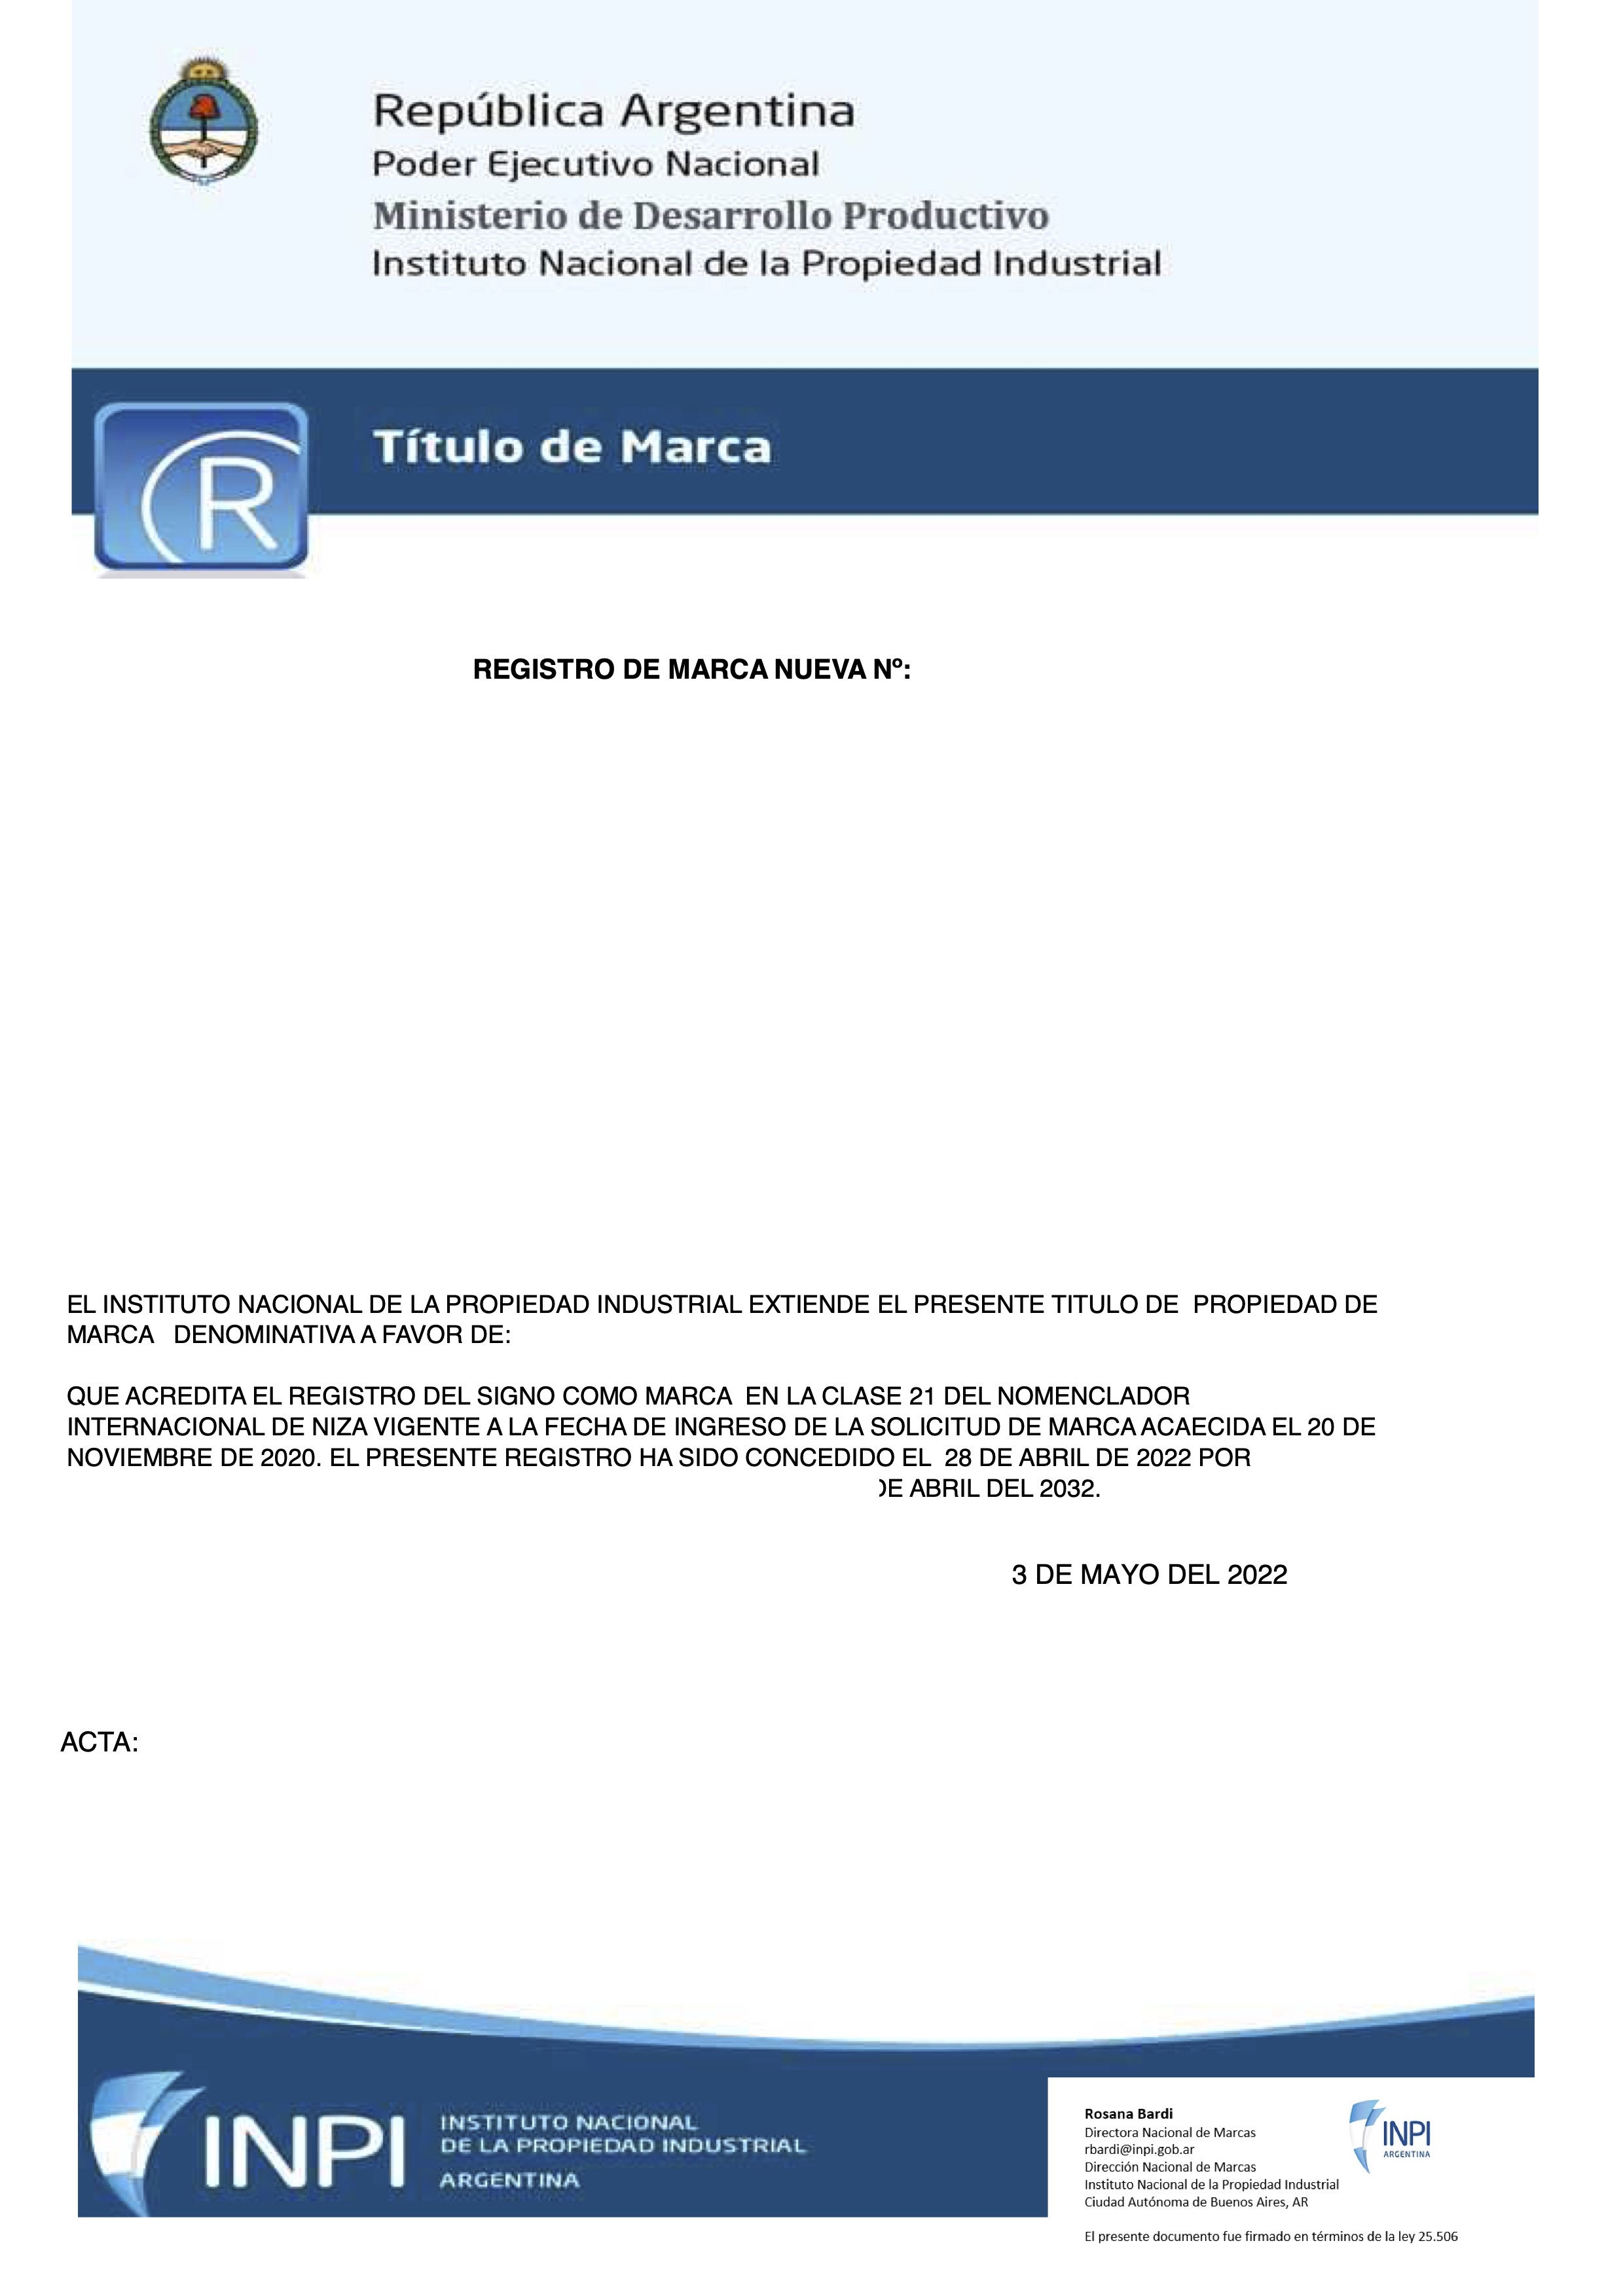 Argentina Trademark Certificate